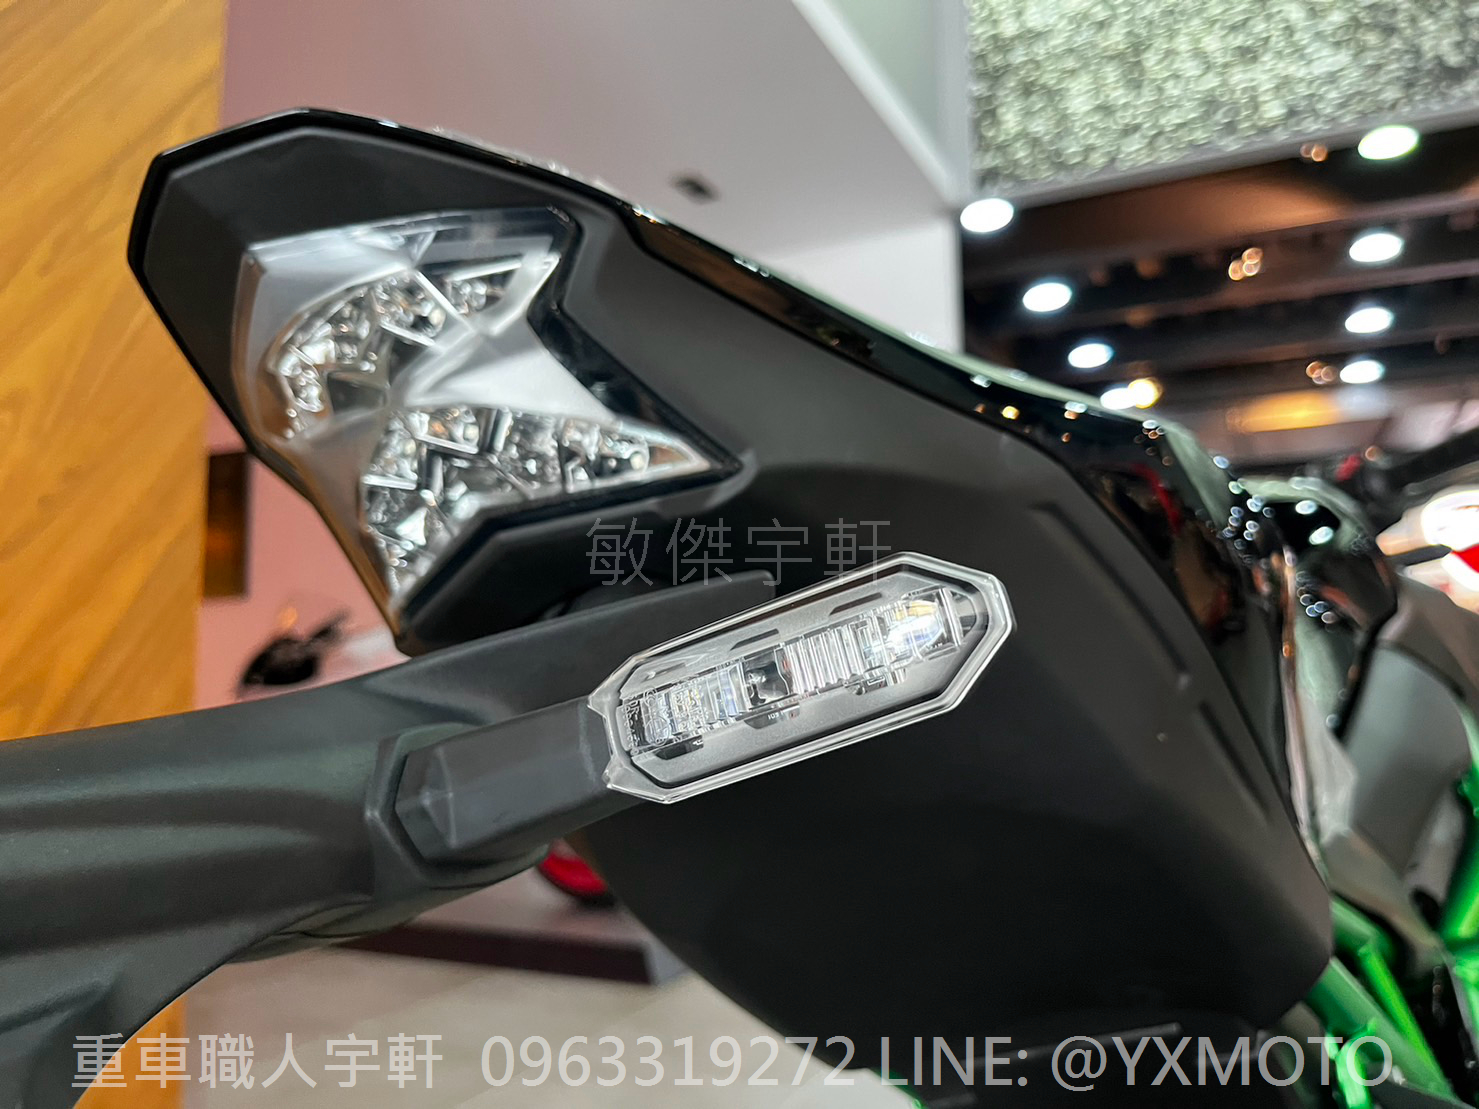 KAWASAKI Z900新車出售中 【敏傑宇軒】2023 KAWASAKI Z900 綠骨消灰 總代理公司車 | 重車銷售職人-宇軒 (敏傑)